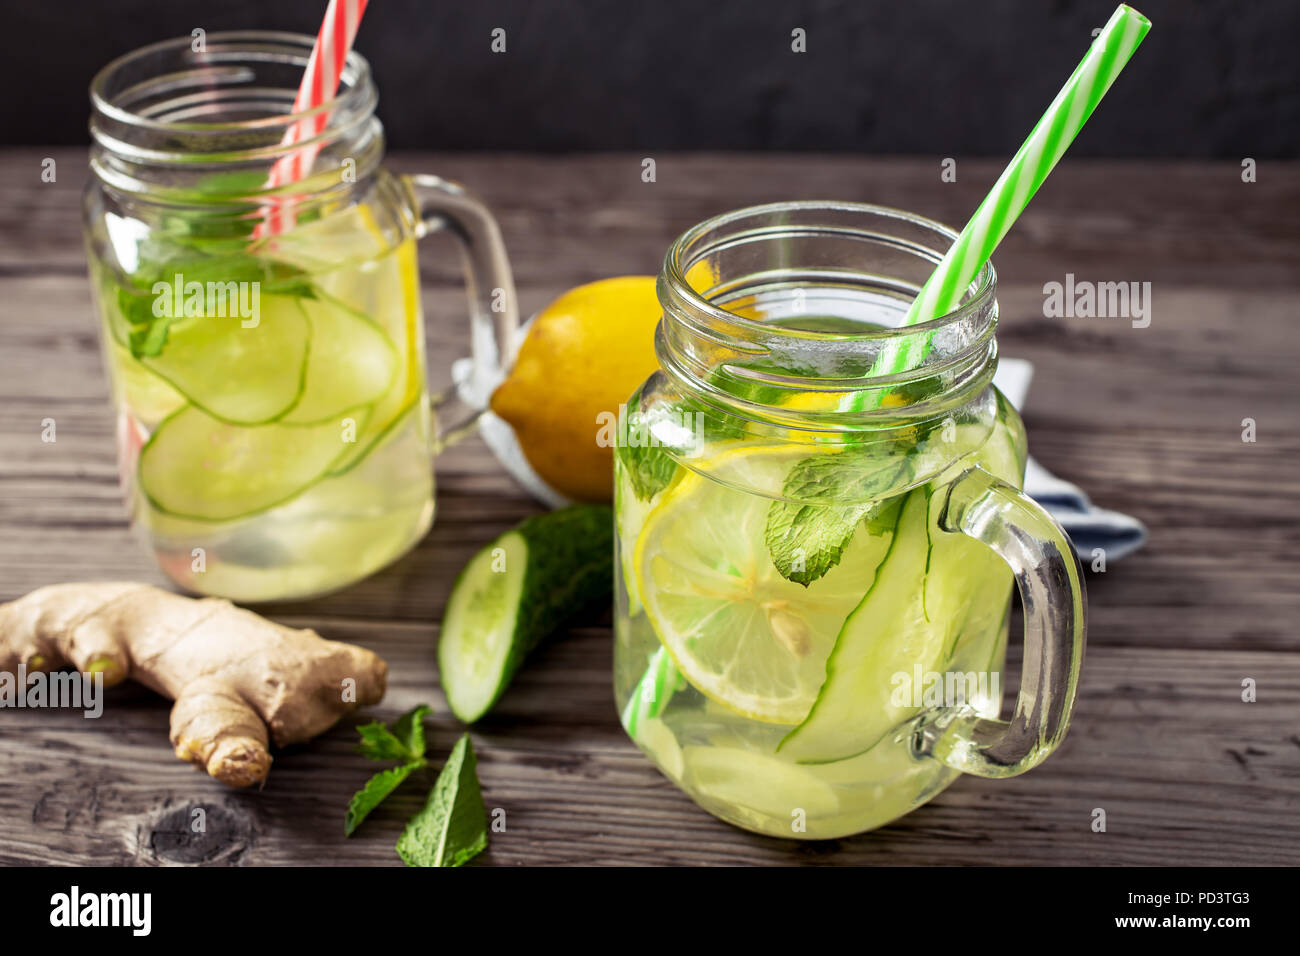 Lemon and cucumber drink Stock Photo